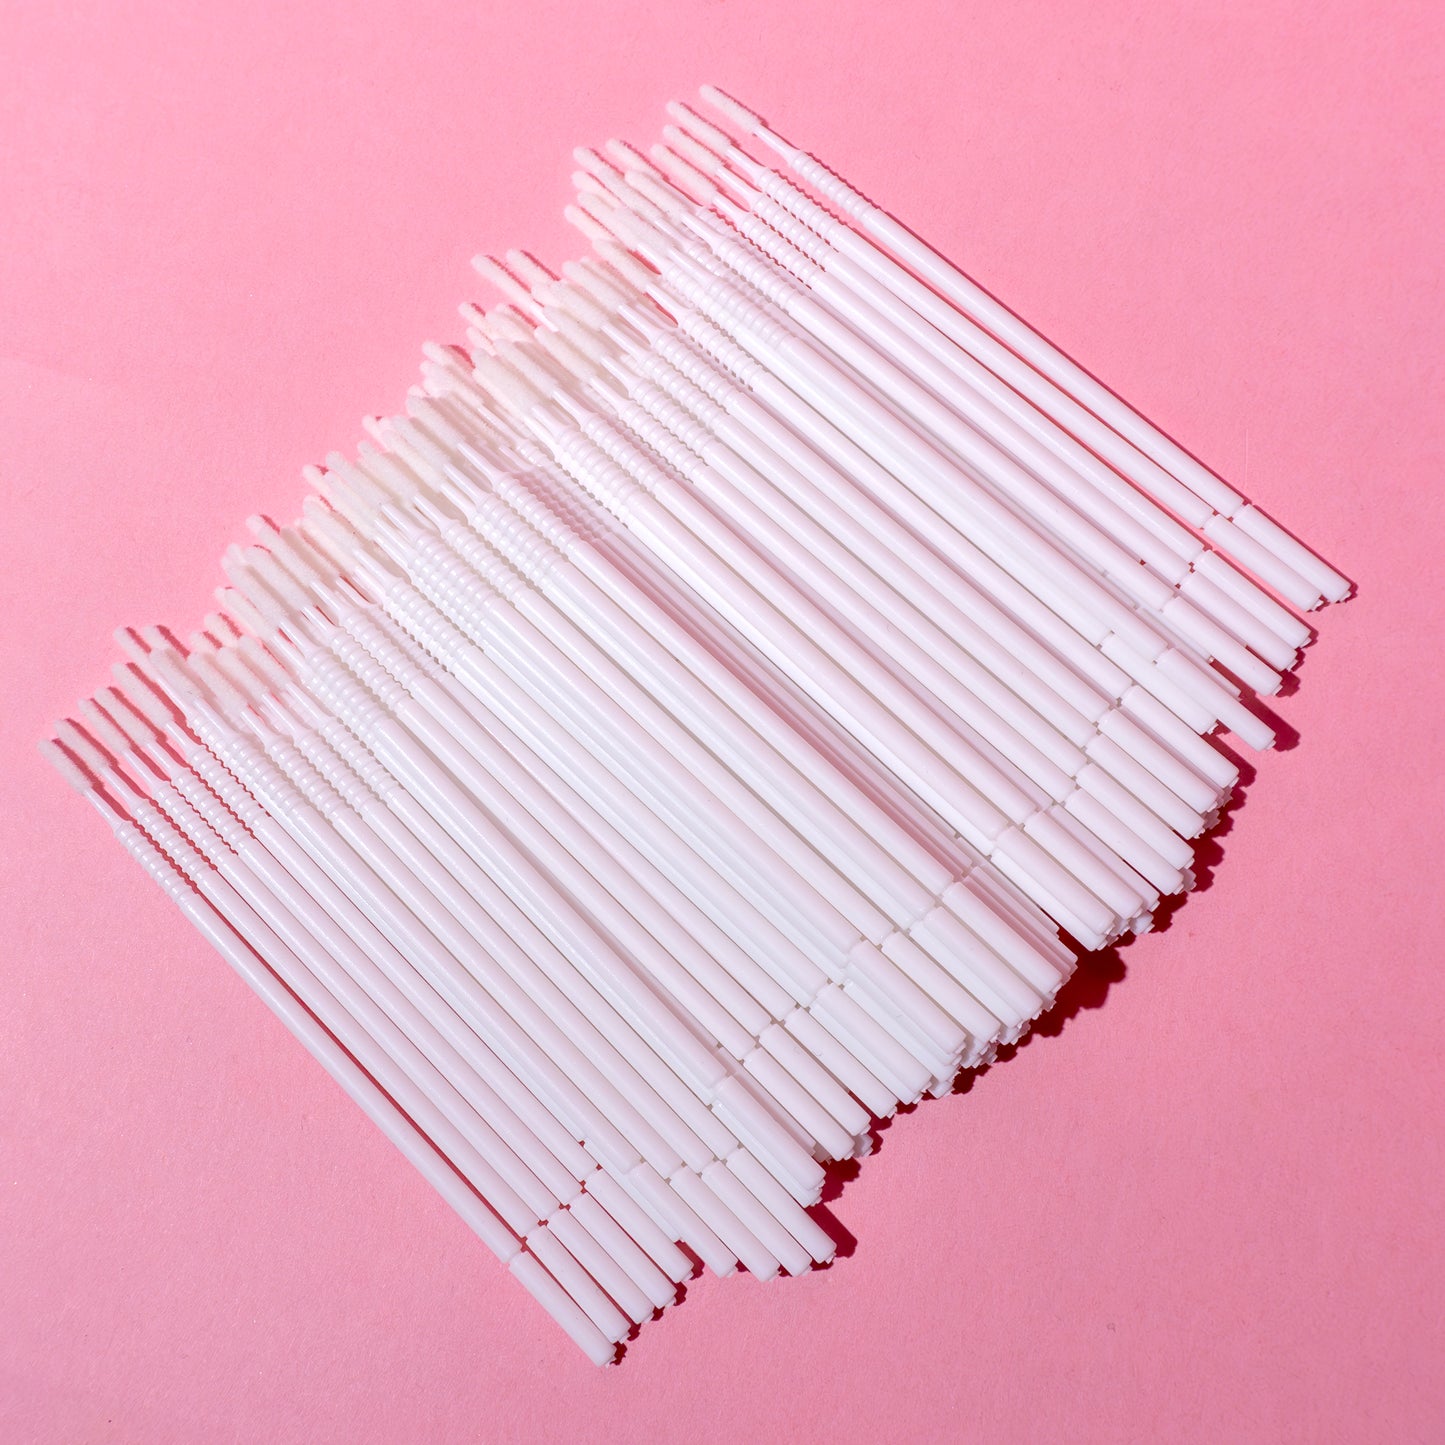 Micro wipe sticks